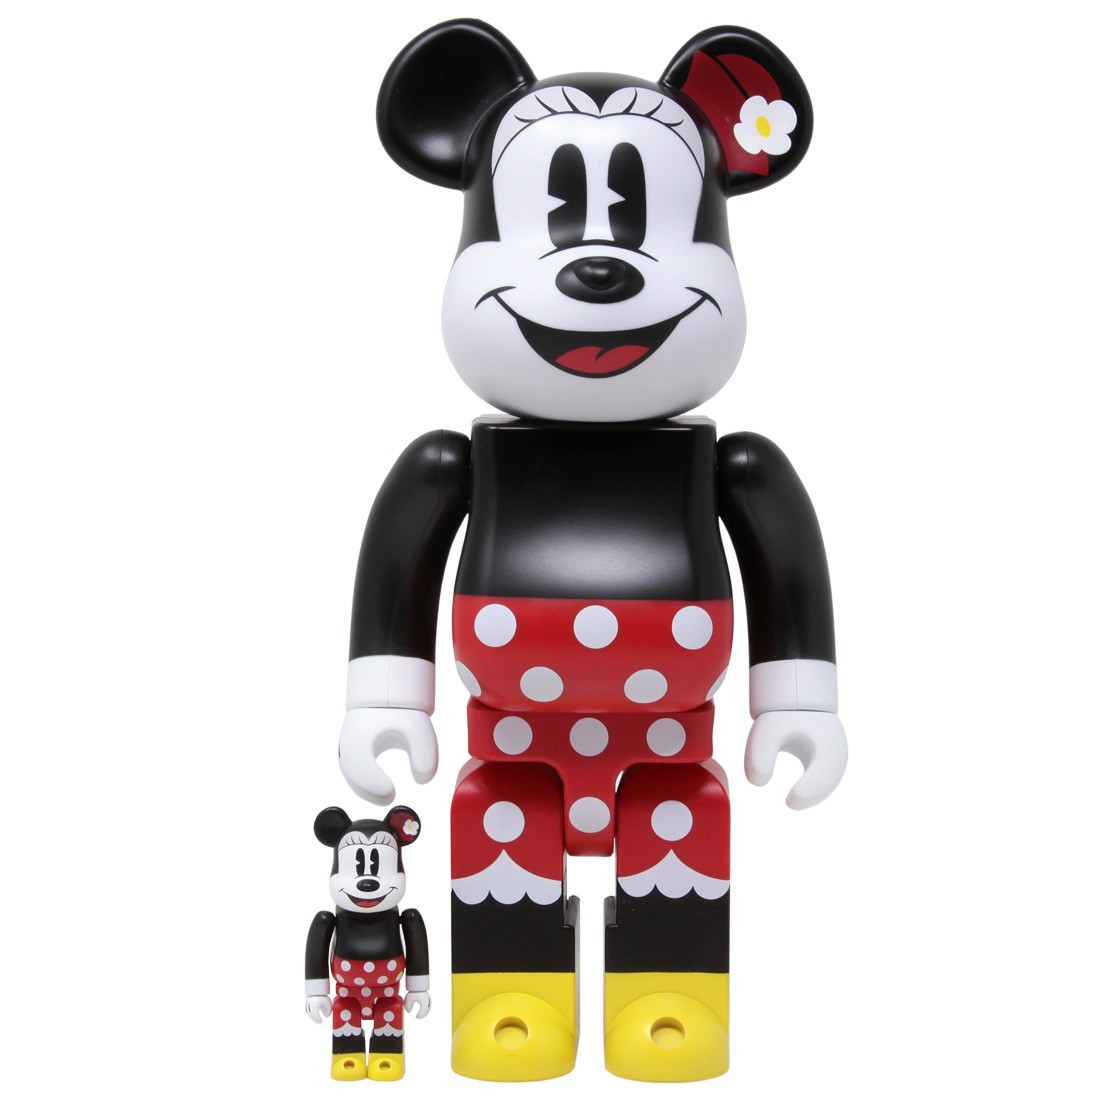 Medicom Disney Minnie Mouse 100% 400% Bearbrick Figure Set black red